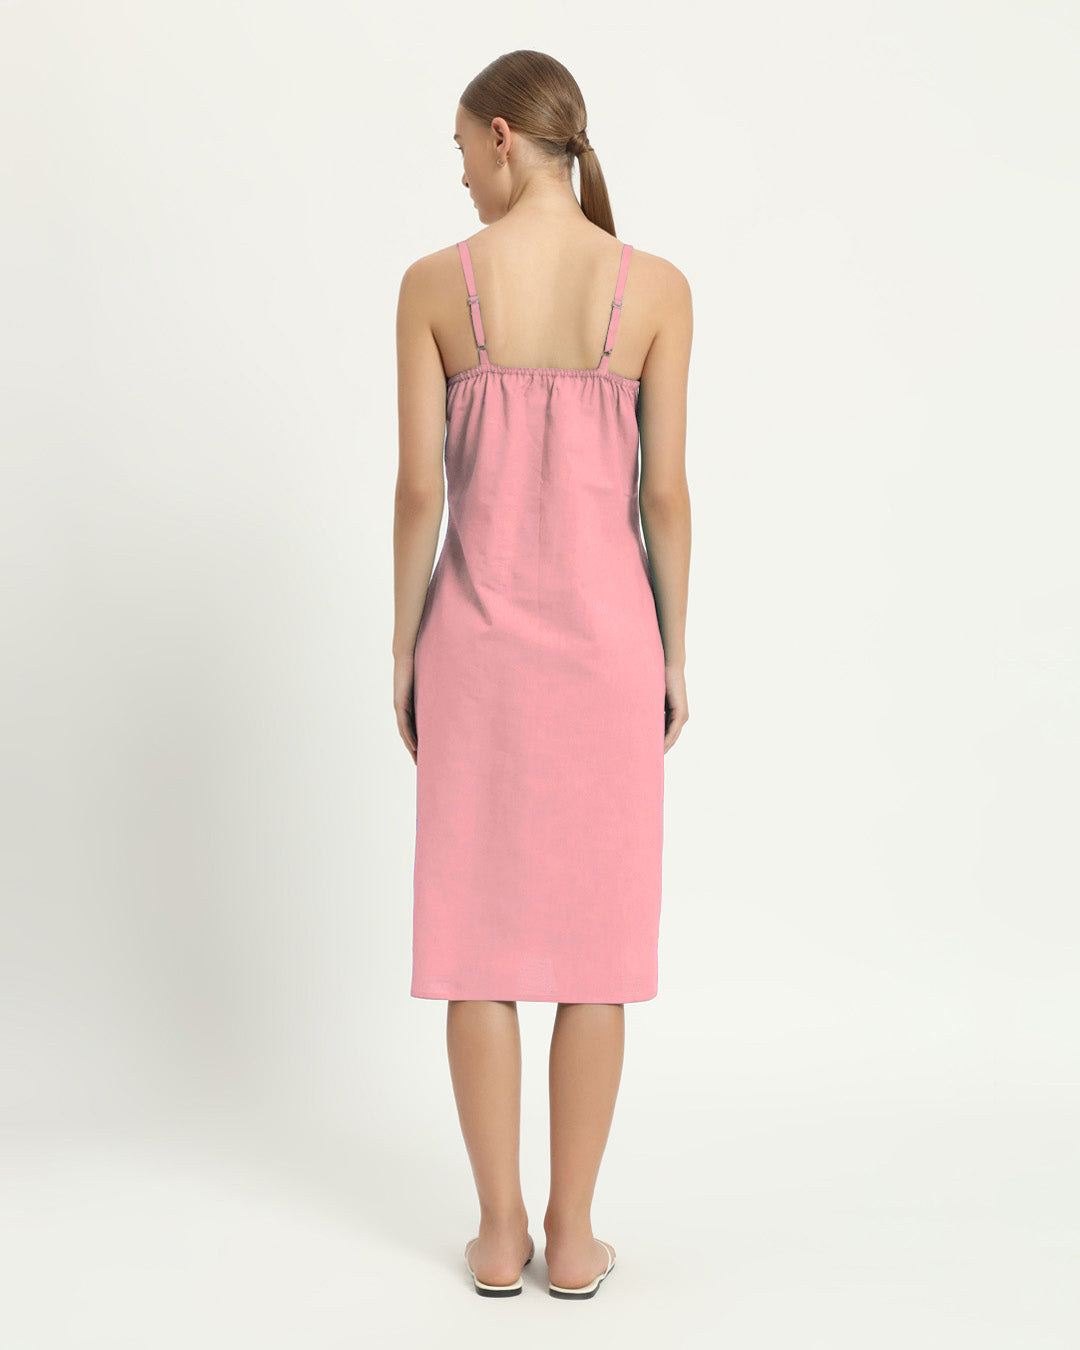 The Seesen Fondant Pink Cotton Dress